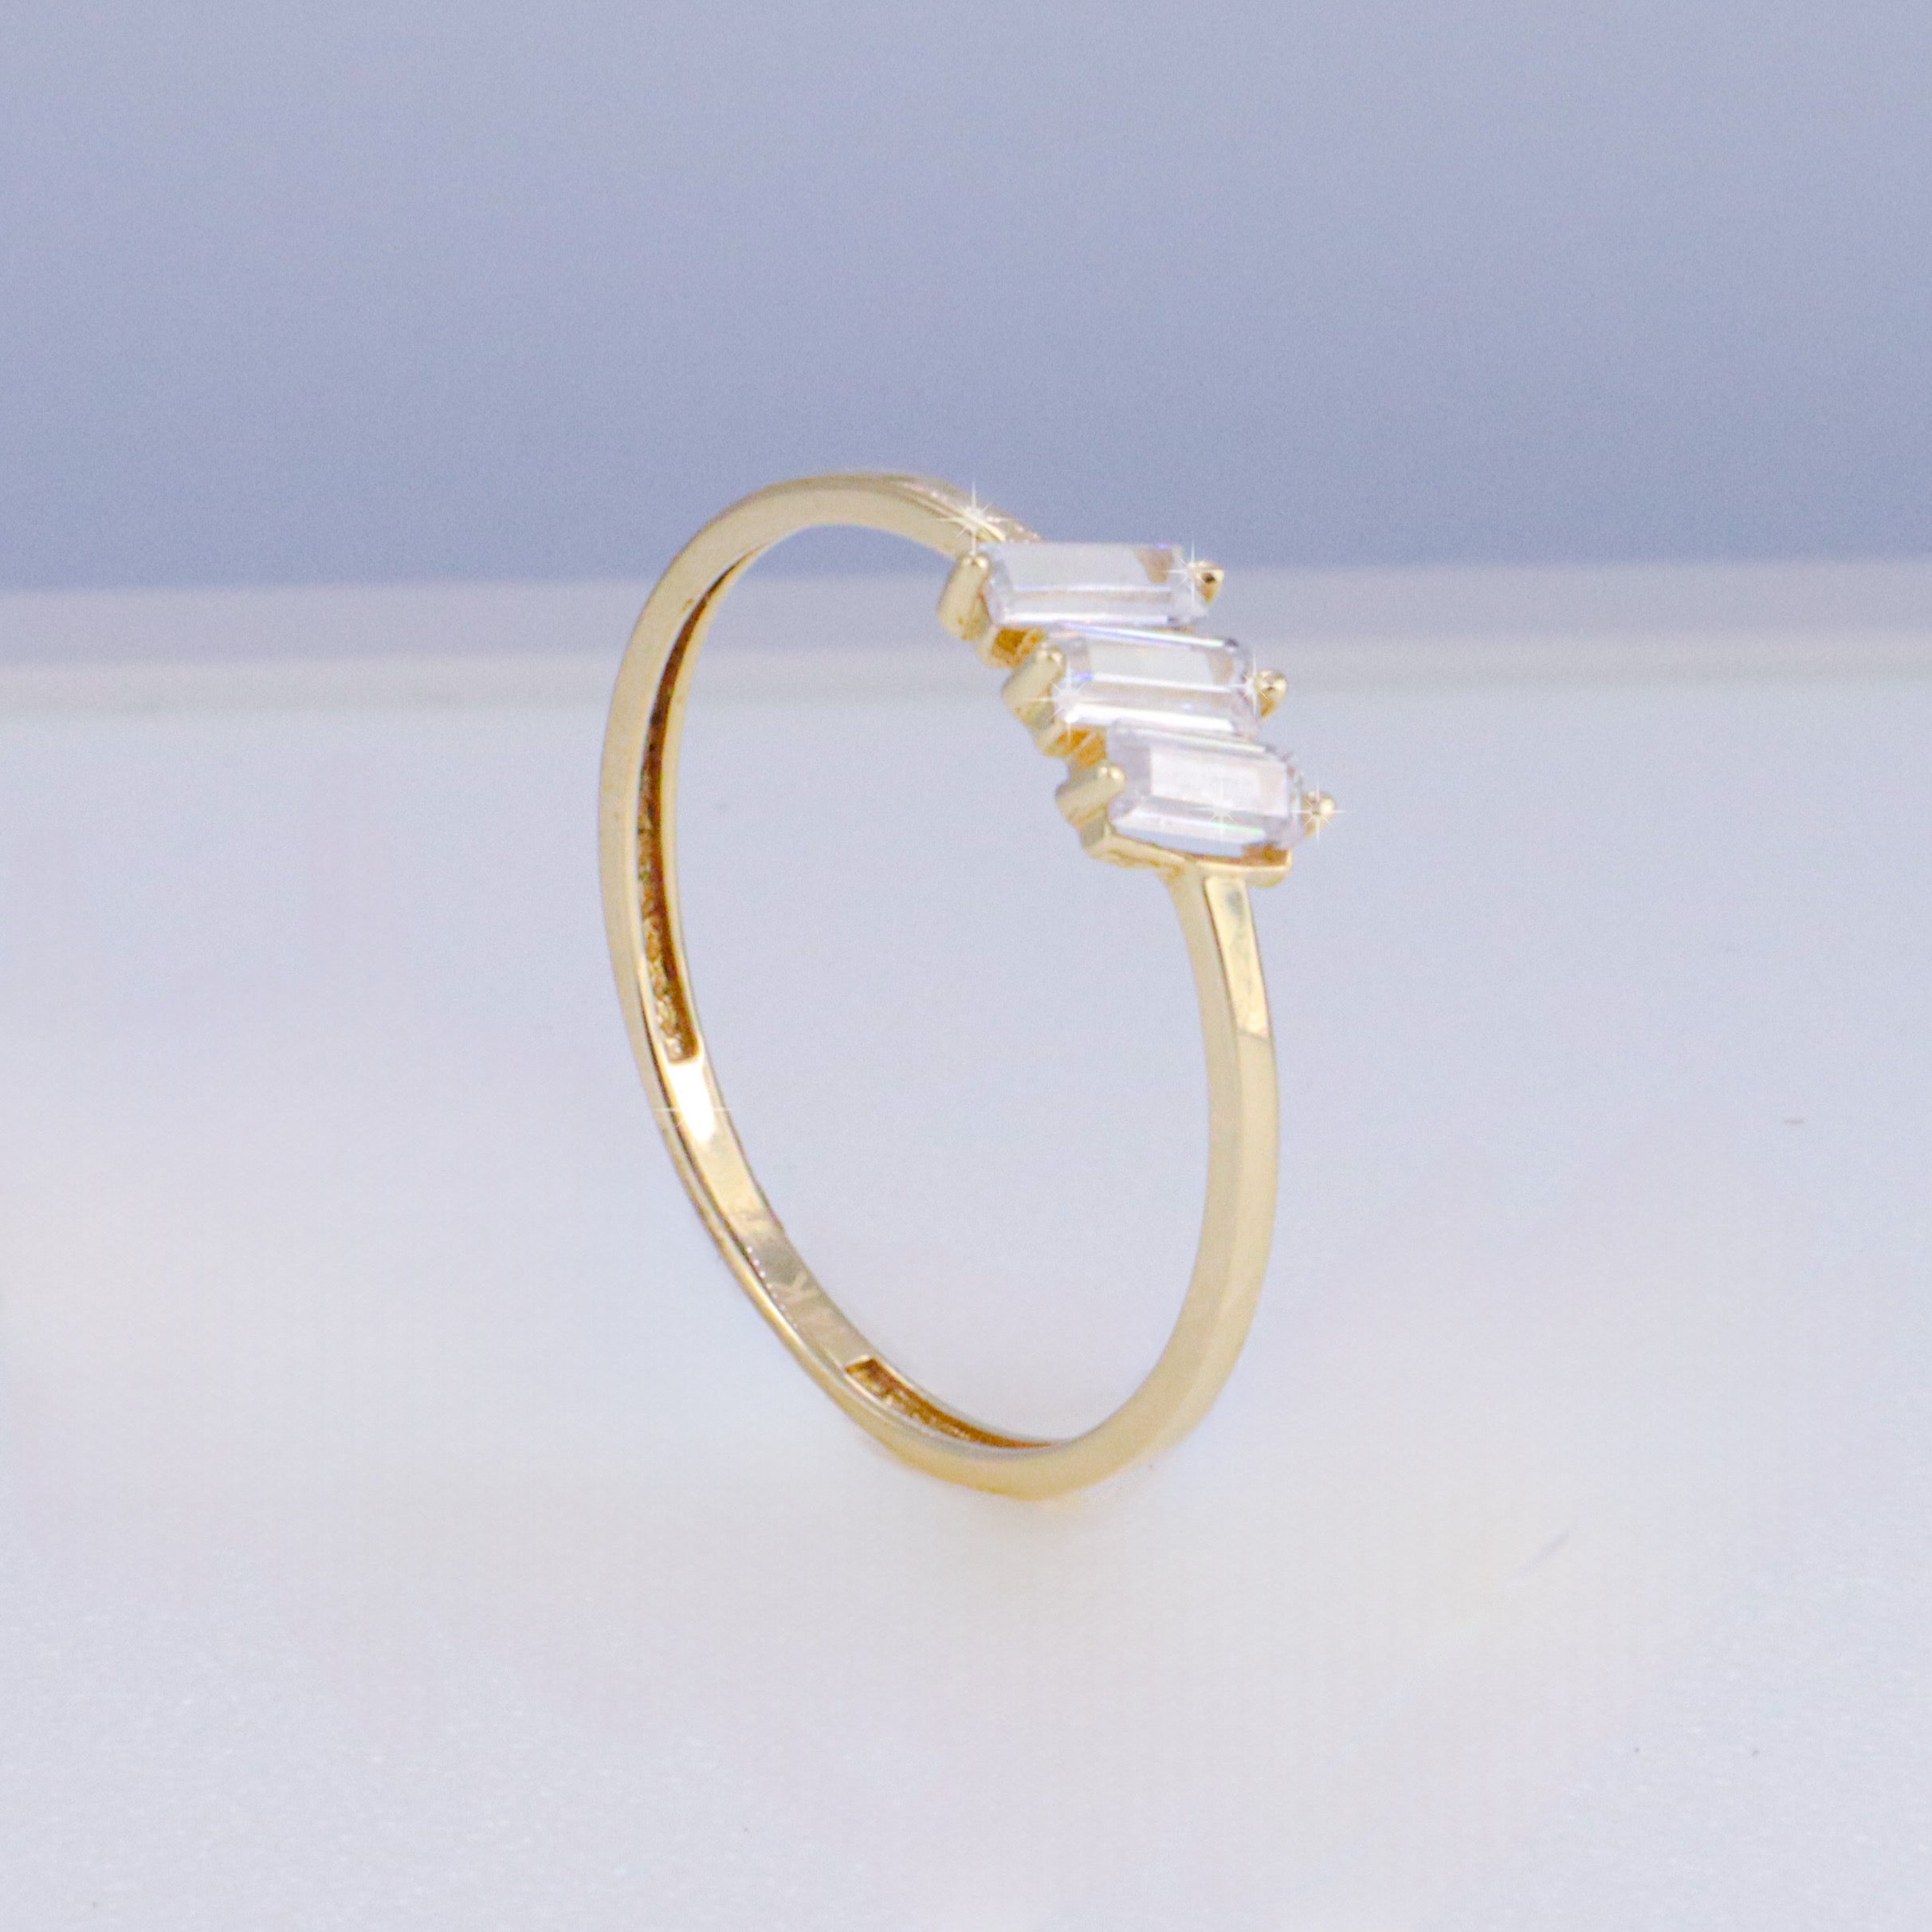 Copy of 14k Gold Baguette Ring Size 7.5